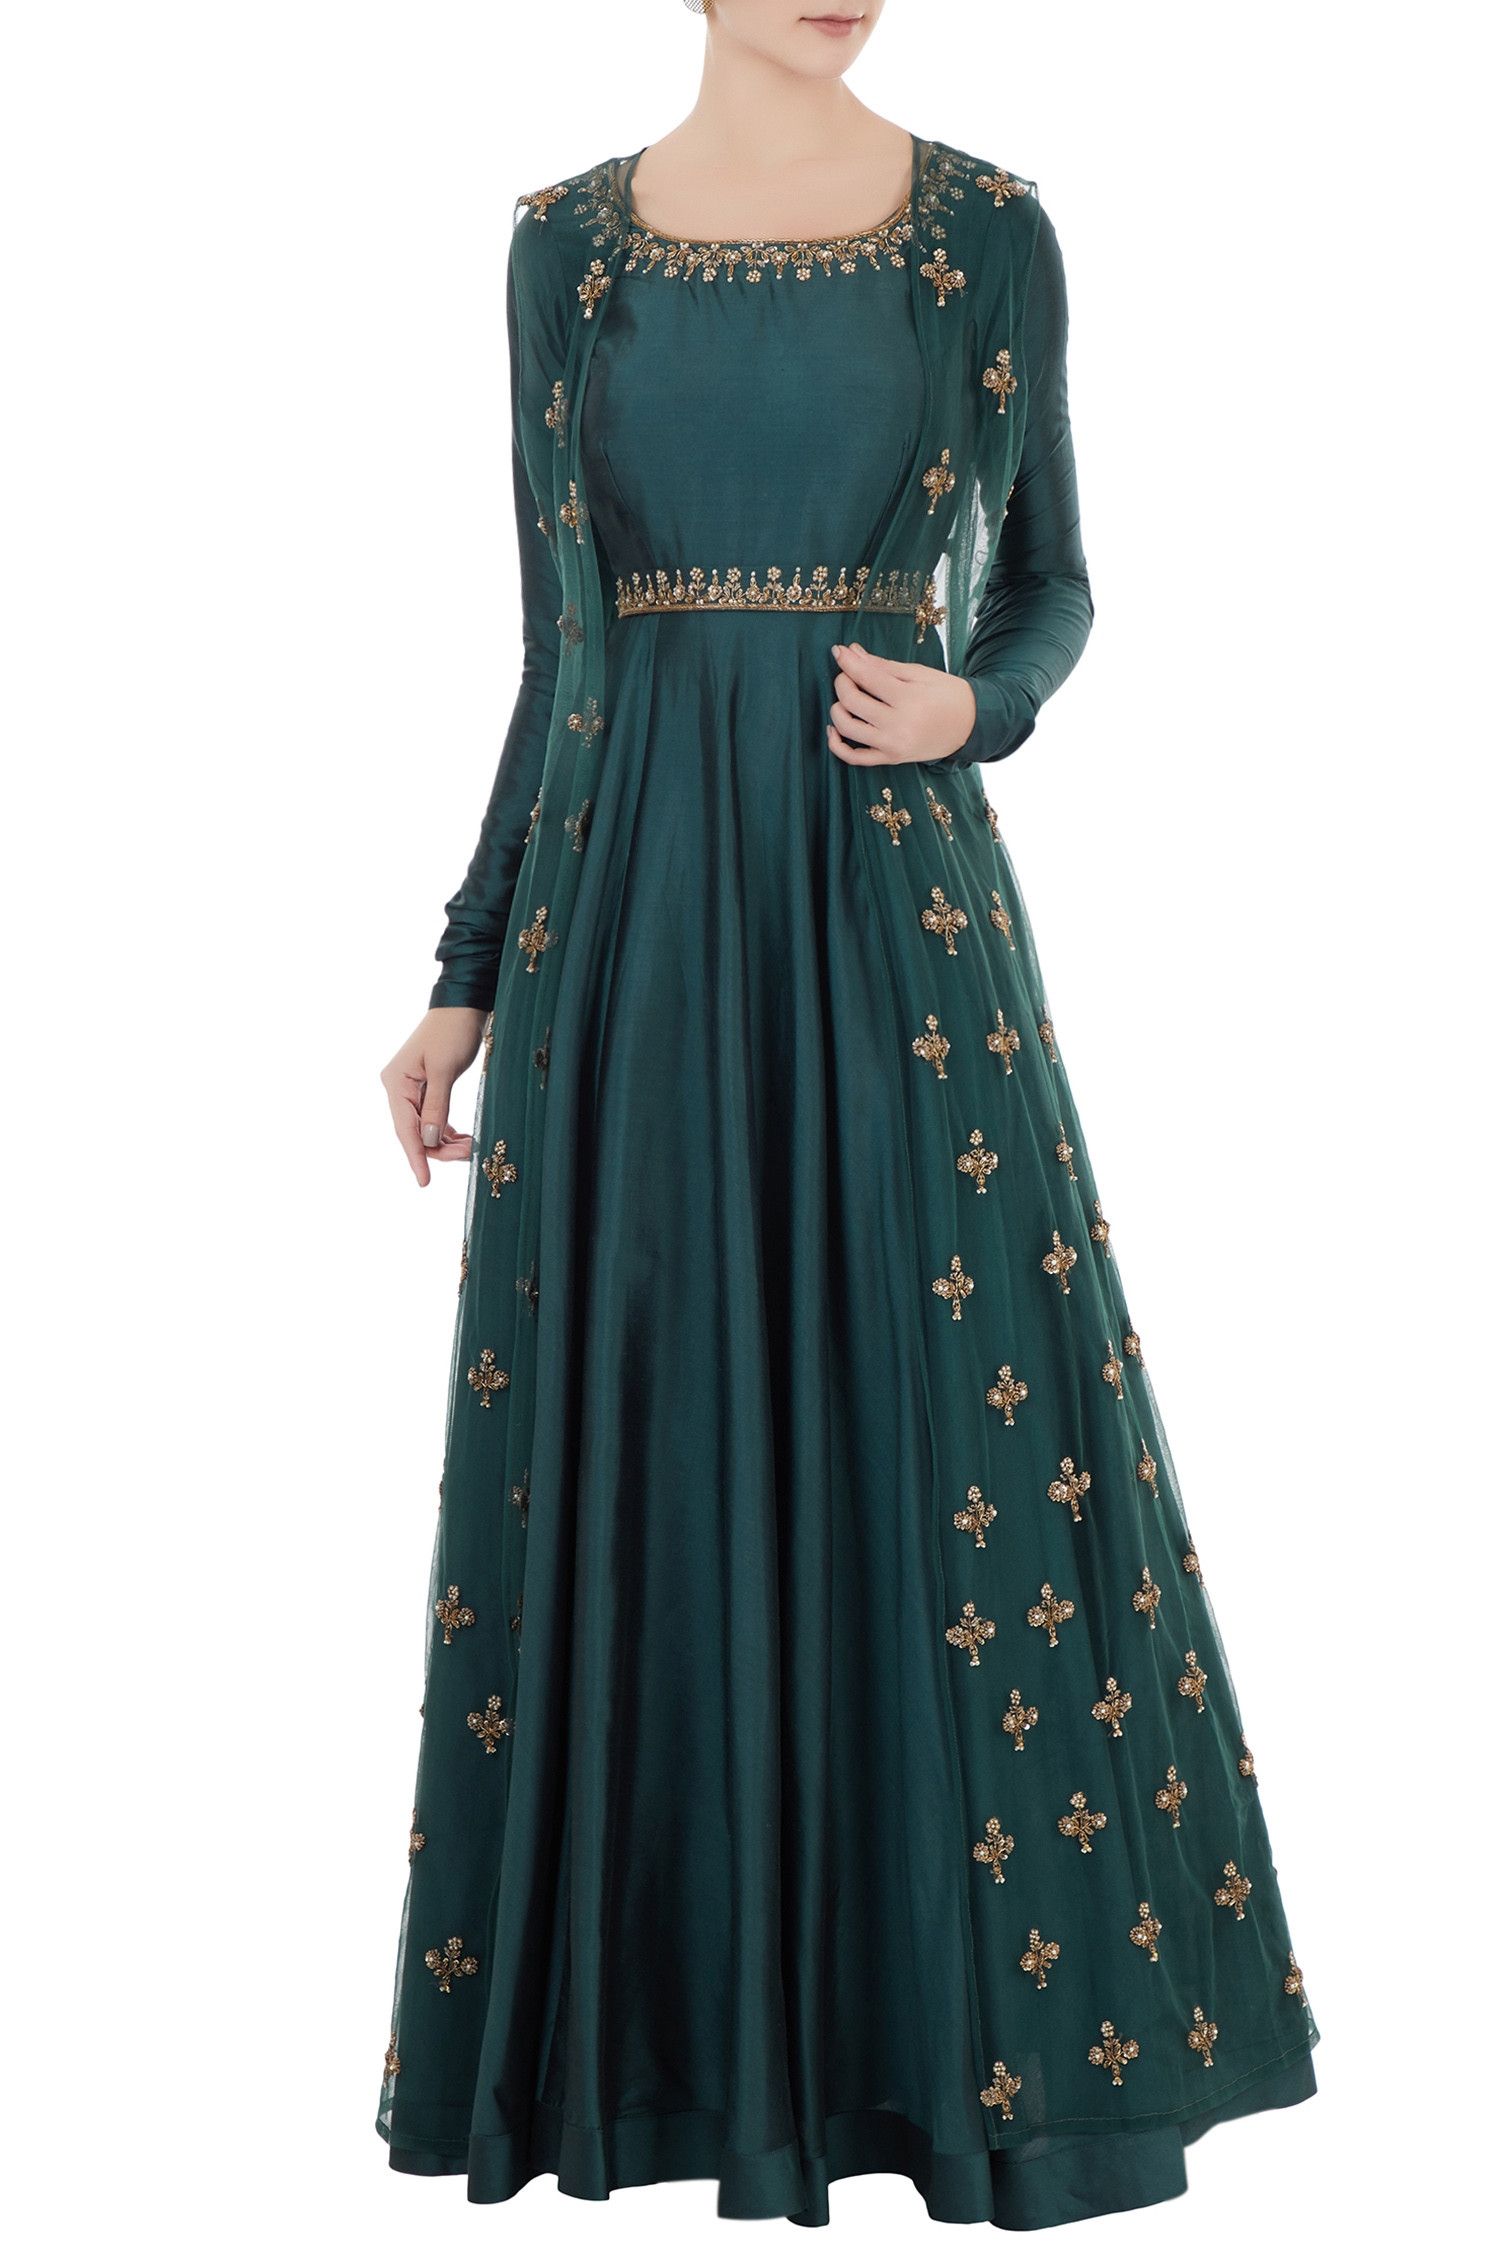 Green Gown In Two-Tone Taffeta Silk With Plain